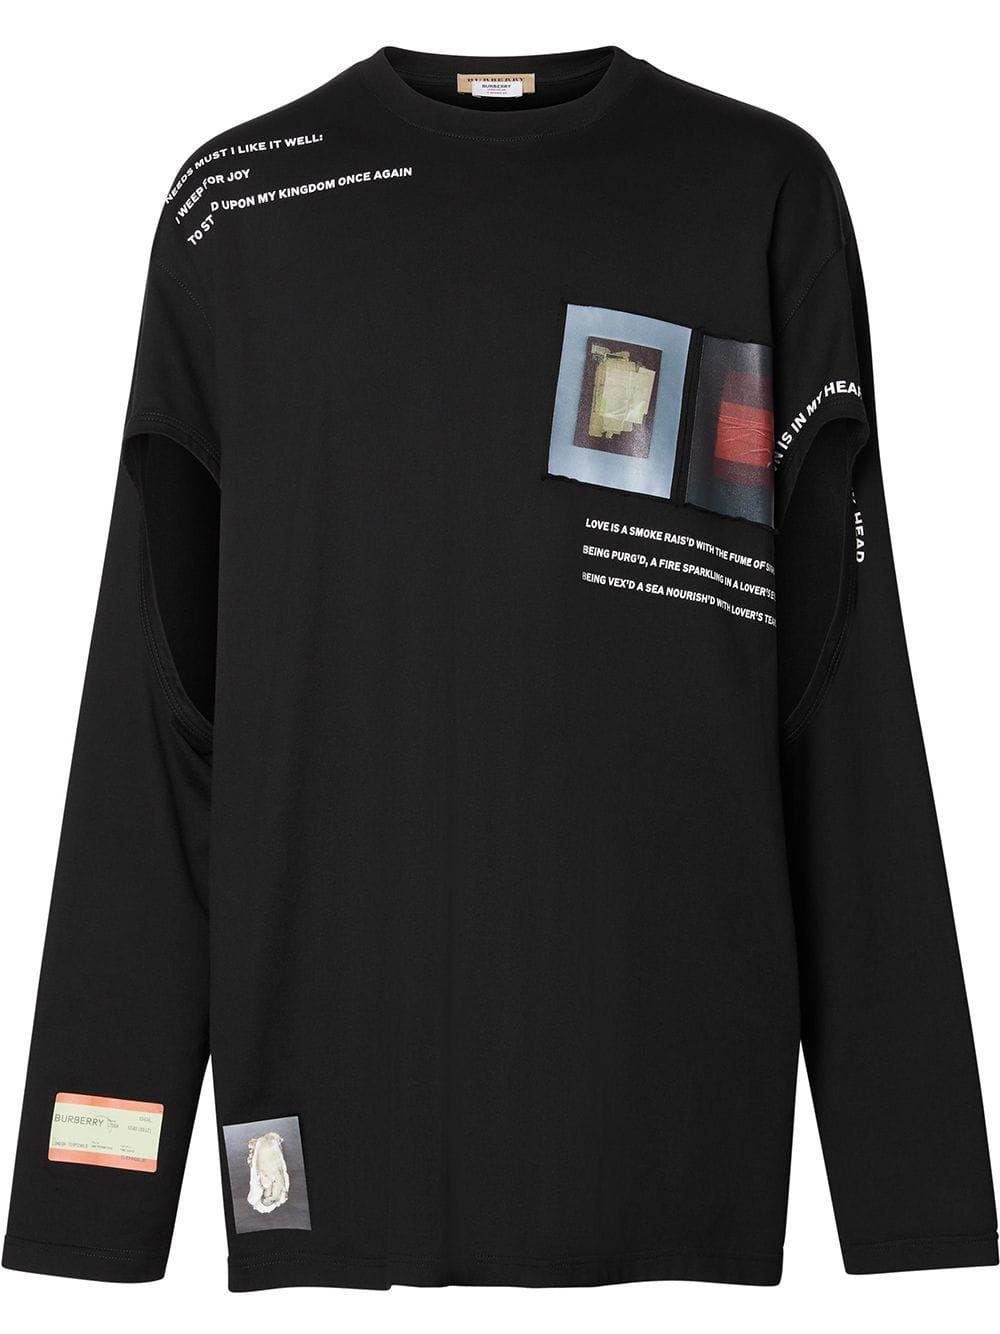 Burberry Black Cotton T-shirt in Black for Men - Lyst